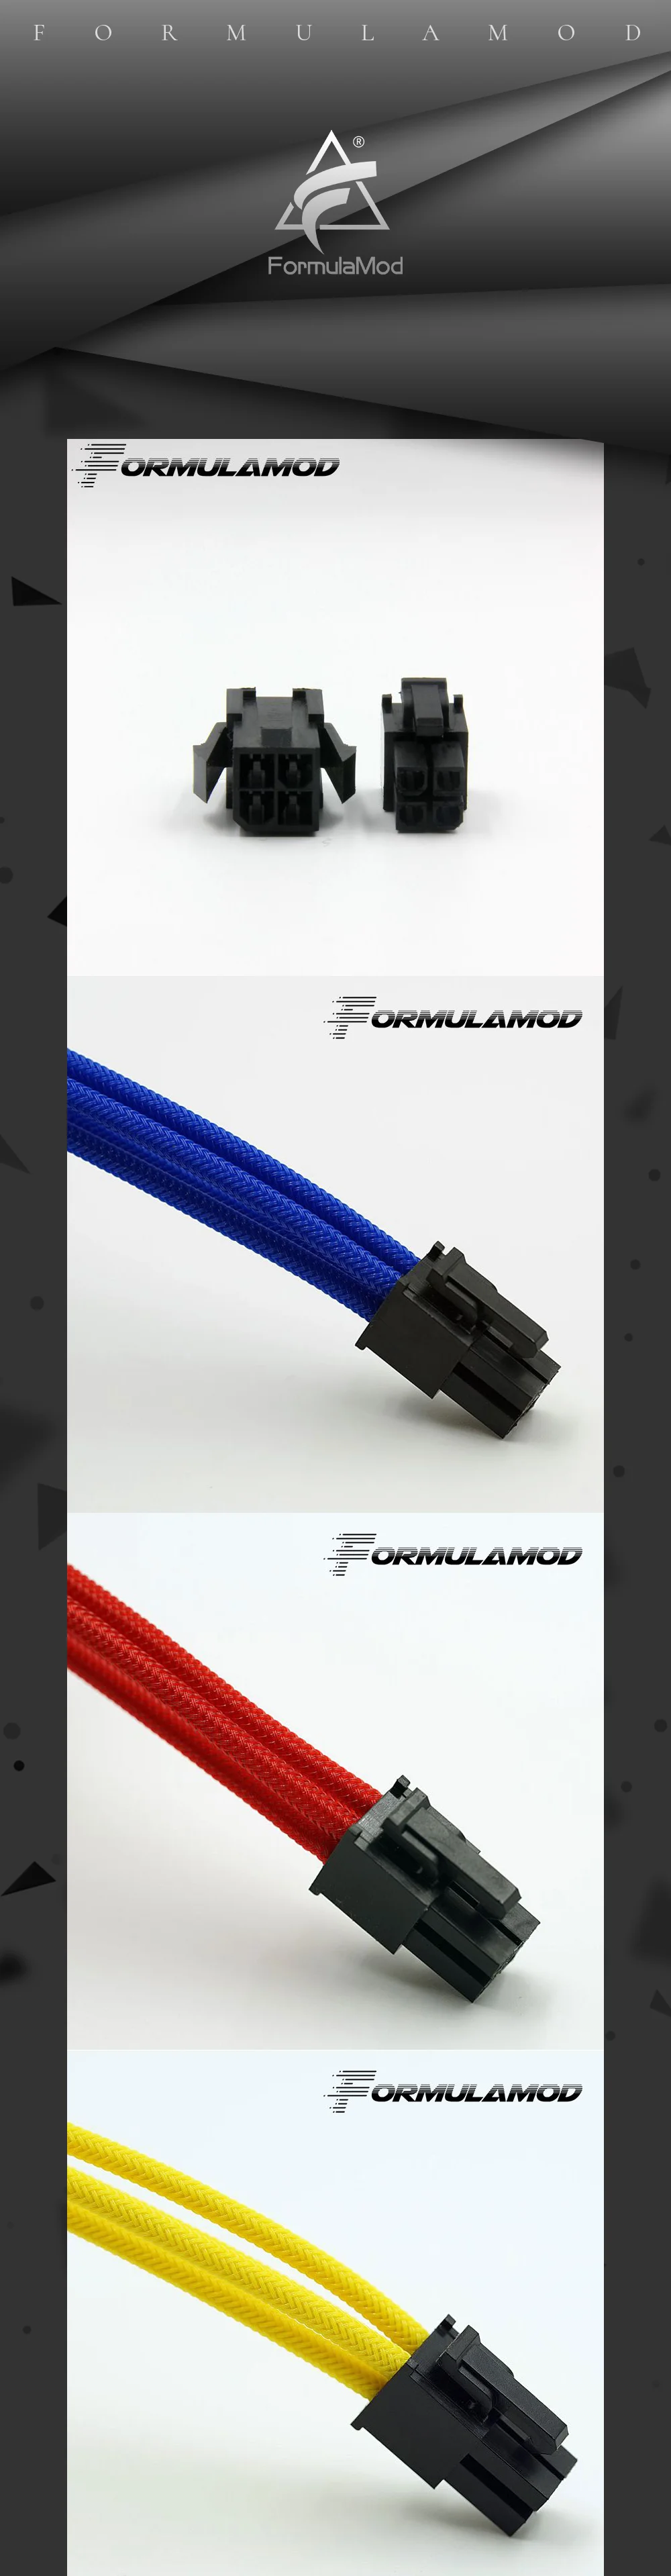 FormulaMod Fm-cpu 4P-A, cpu 4Pin удлинитель питания, материнская плата 18AWG 4Pin многоцветные соответствующие кабели расширения